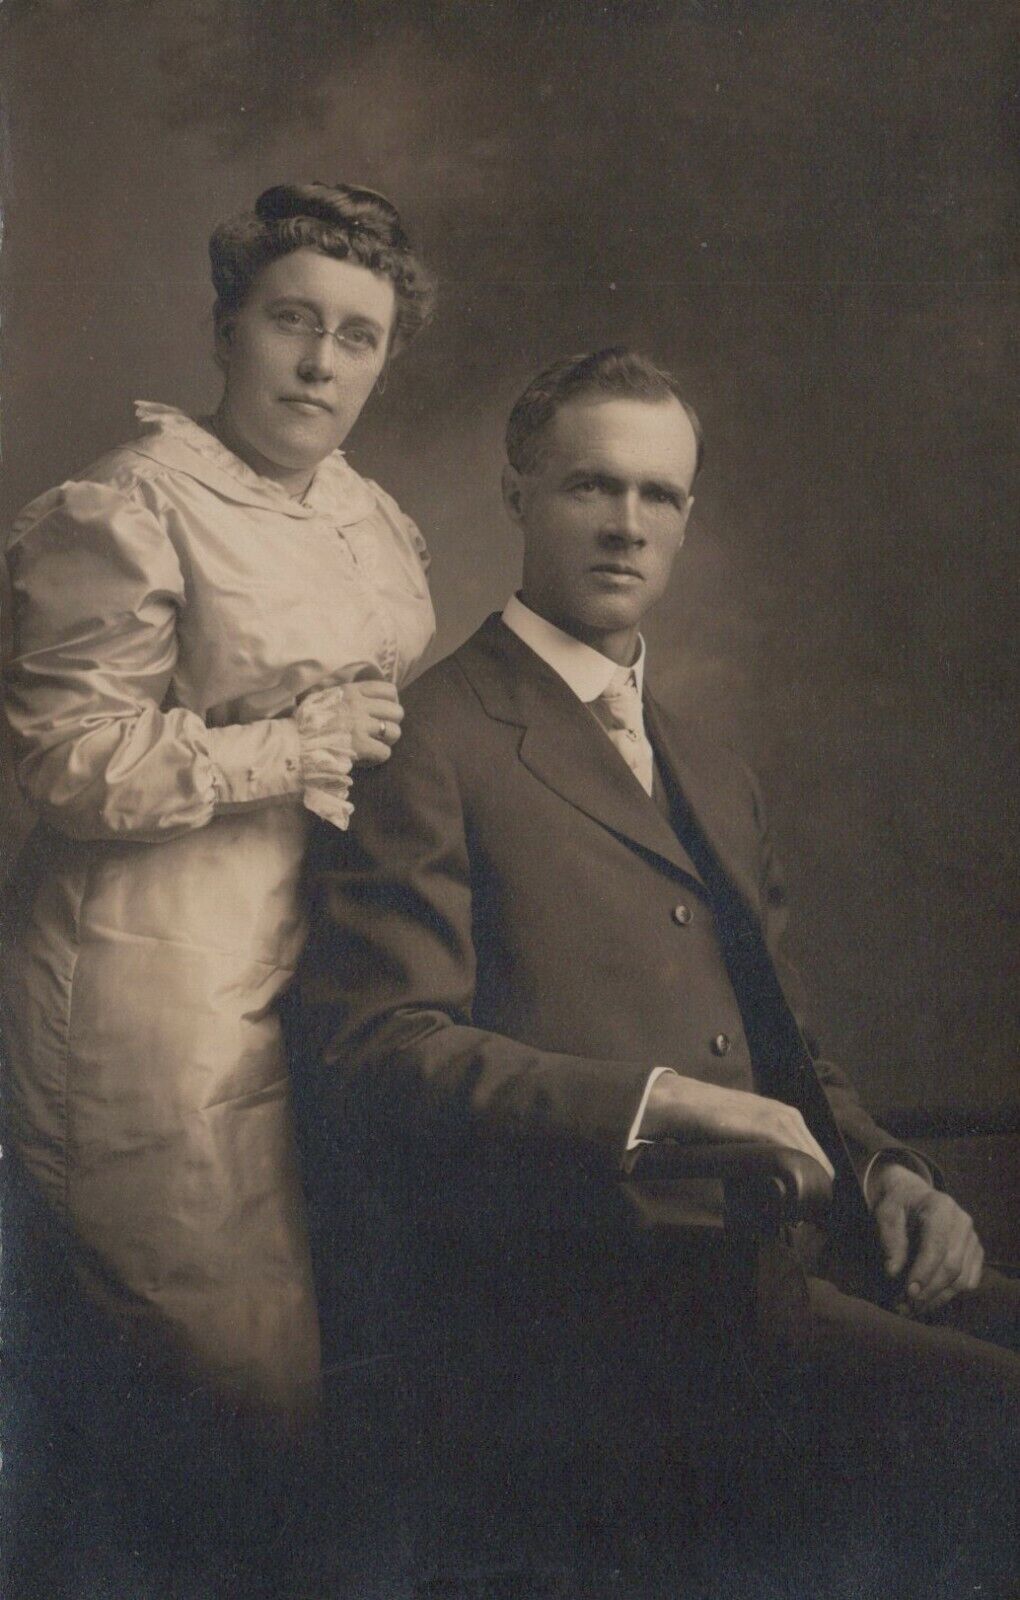 Leona & Frank Couple Posed Vintage Dress Suit Vintage Real Photo RPPC Post Card